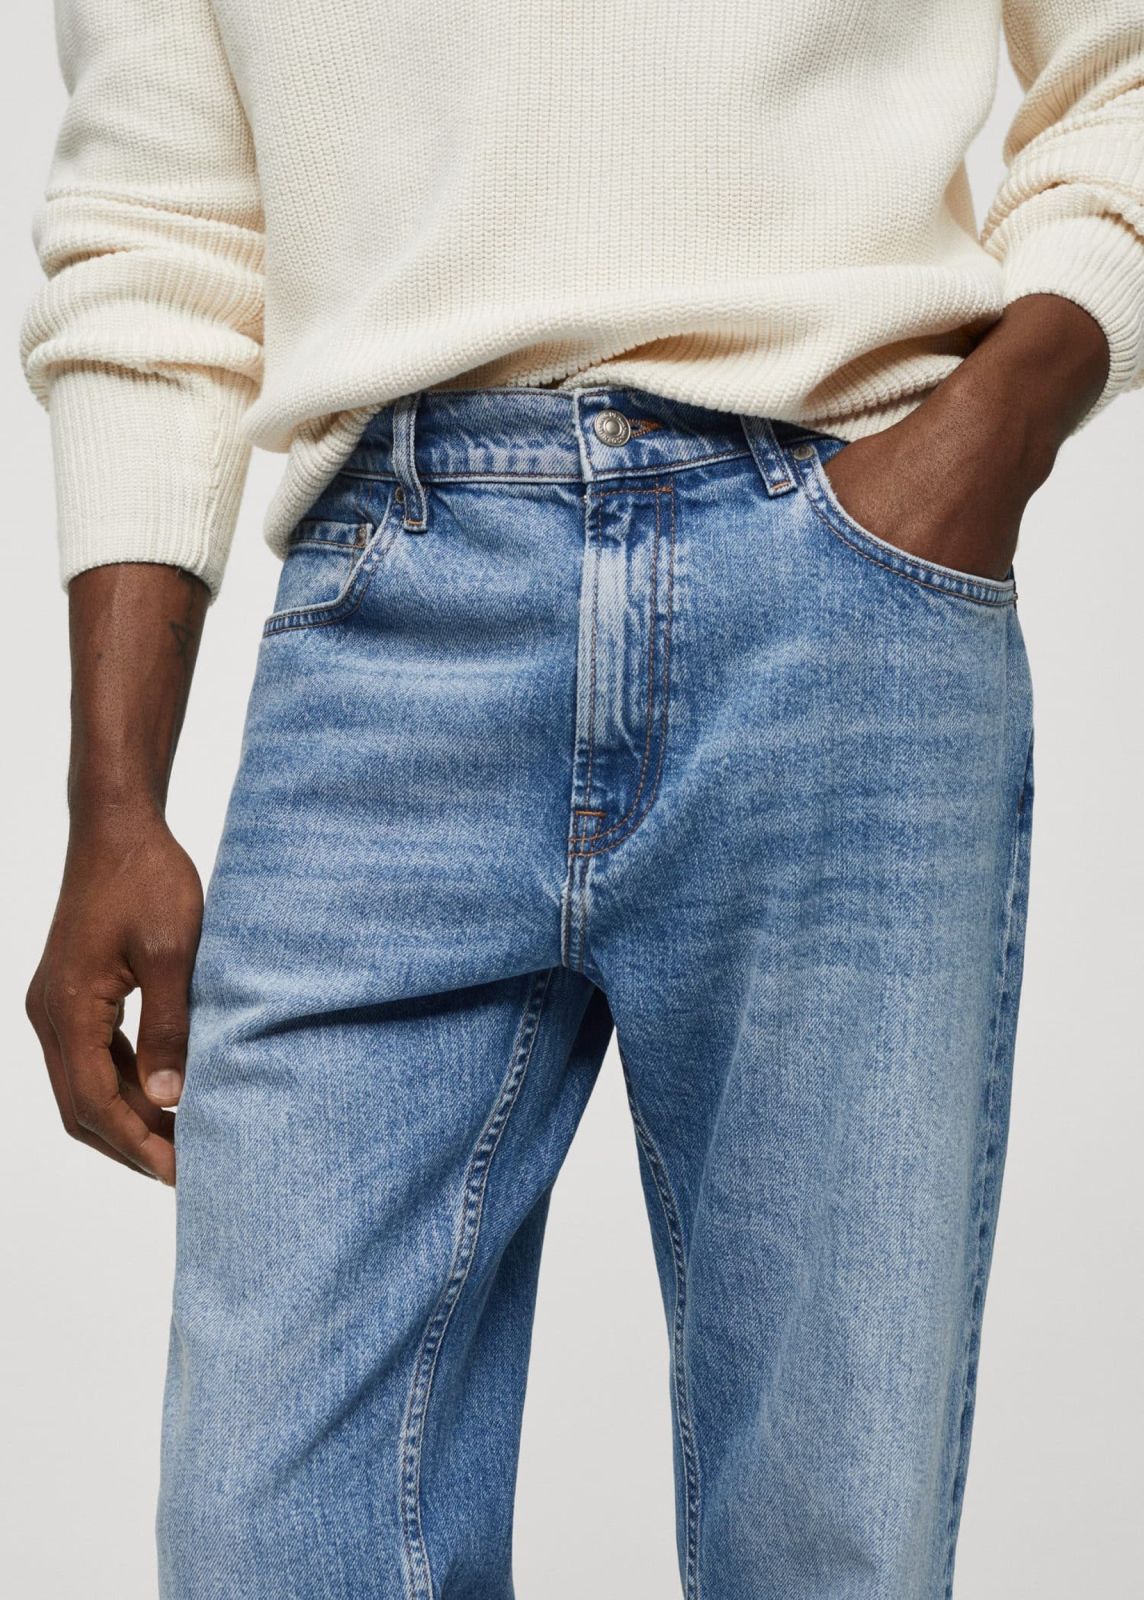  מכנסי ג'ינס ווש של MANGO